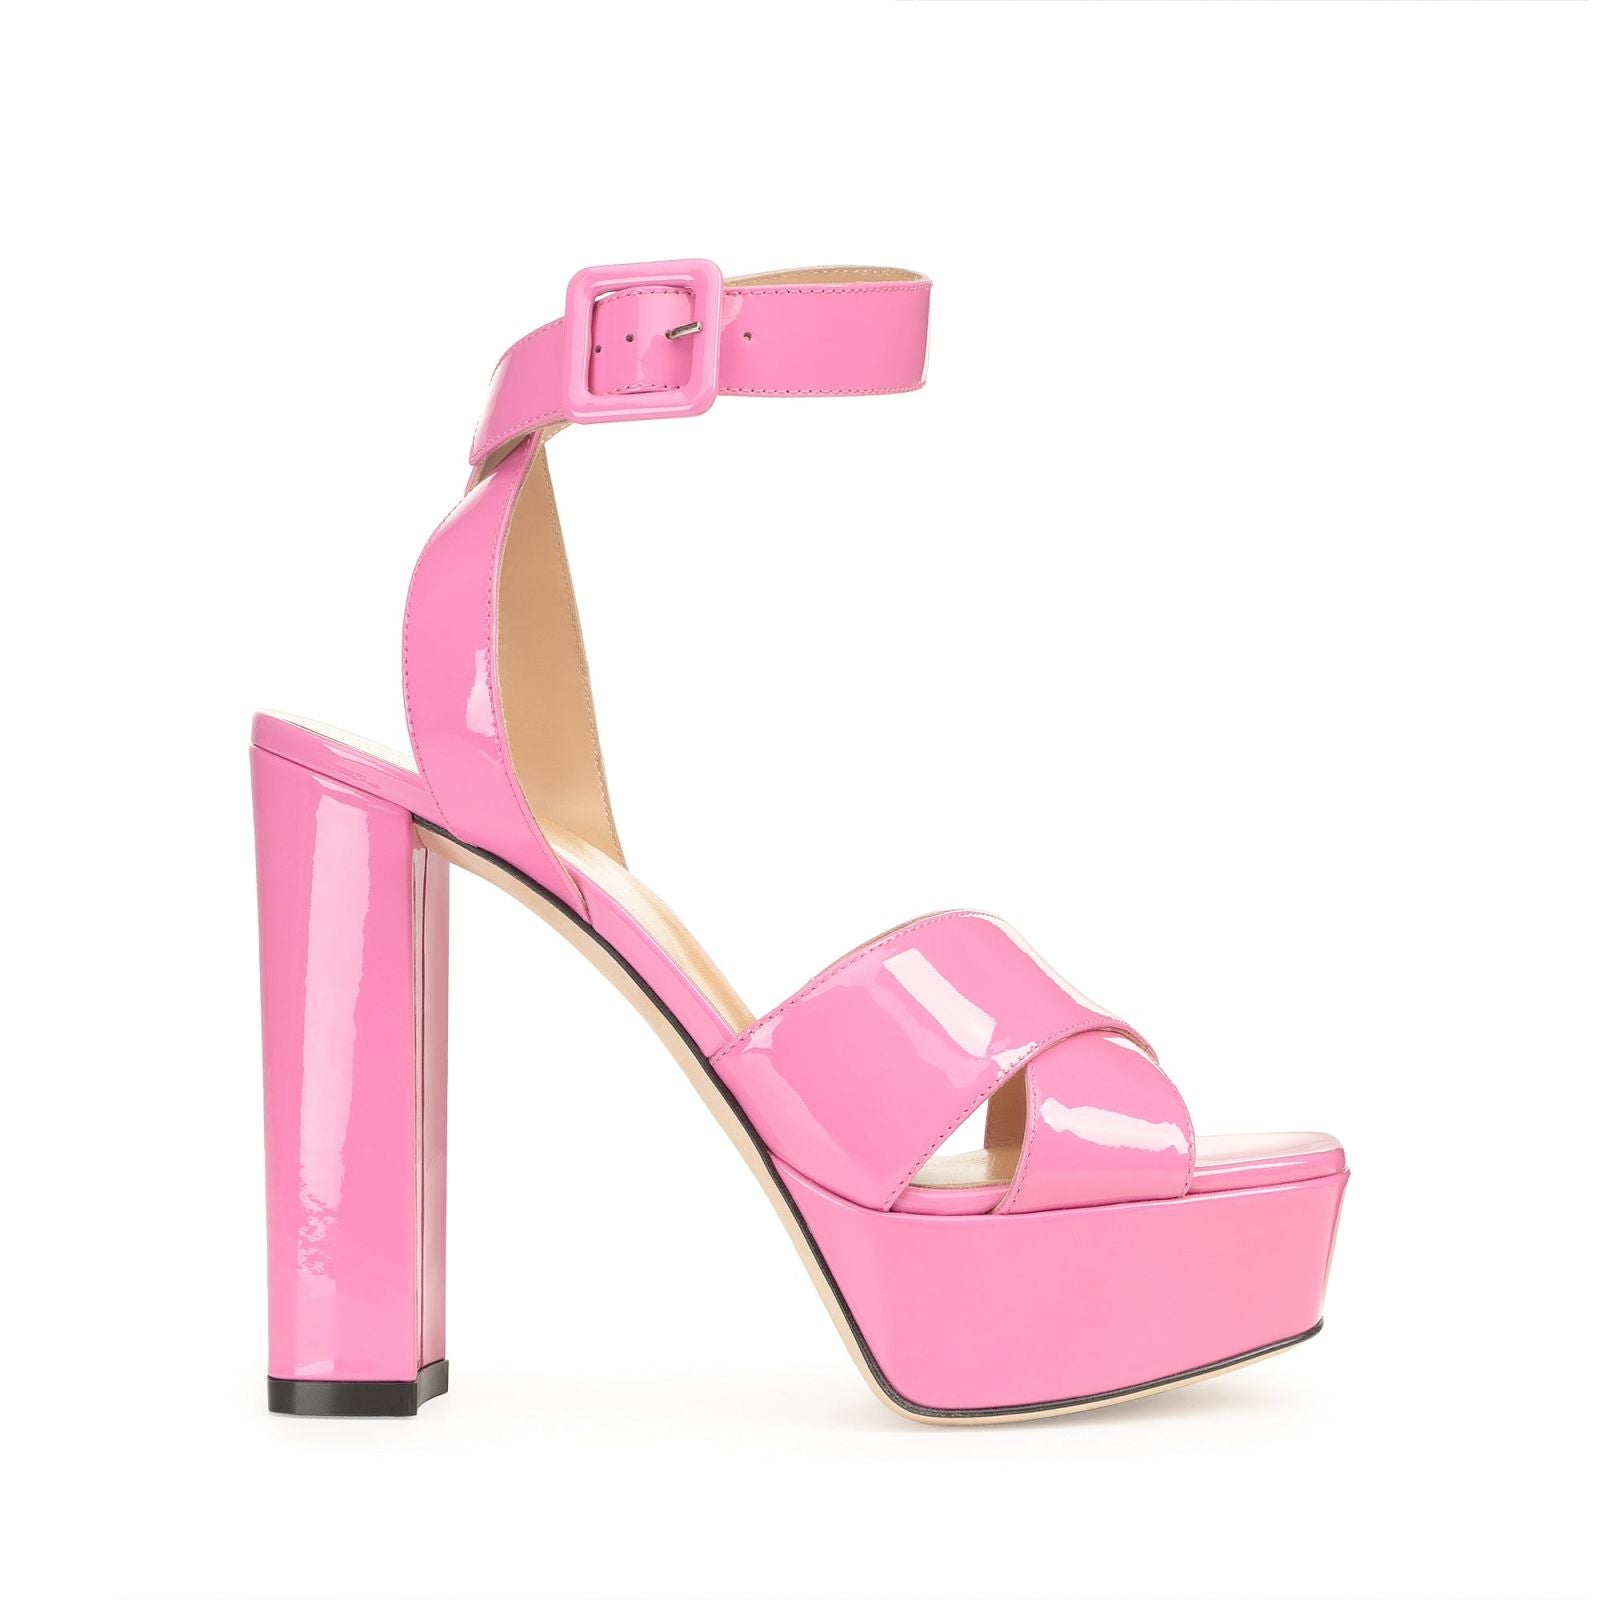 Sr Monica wedge sandals 90 - Pink